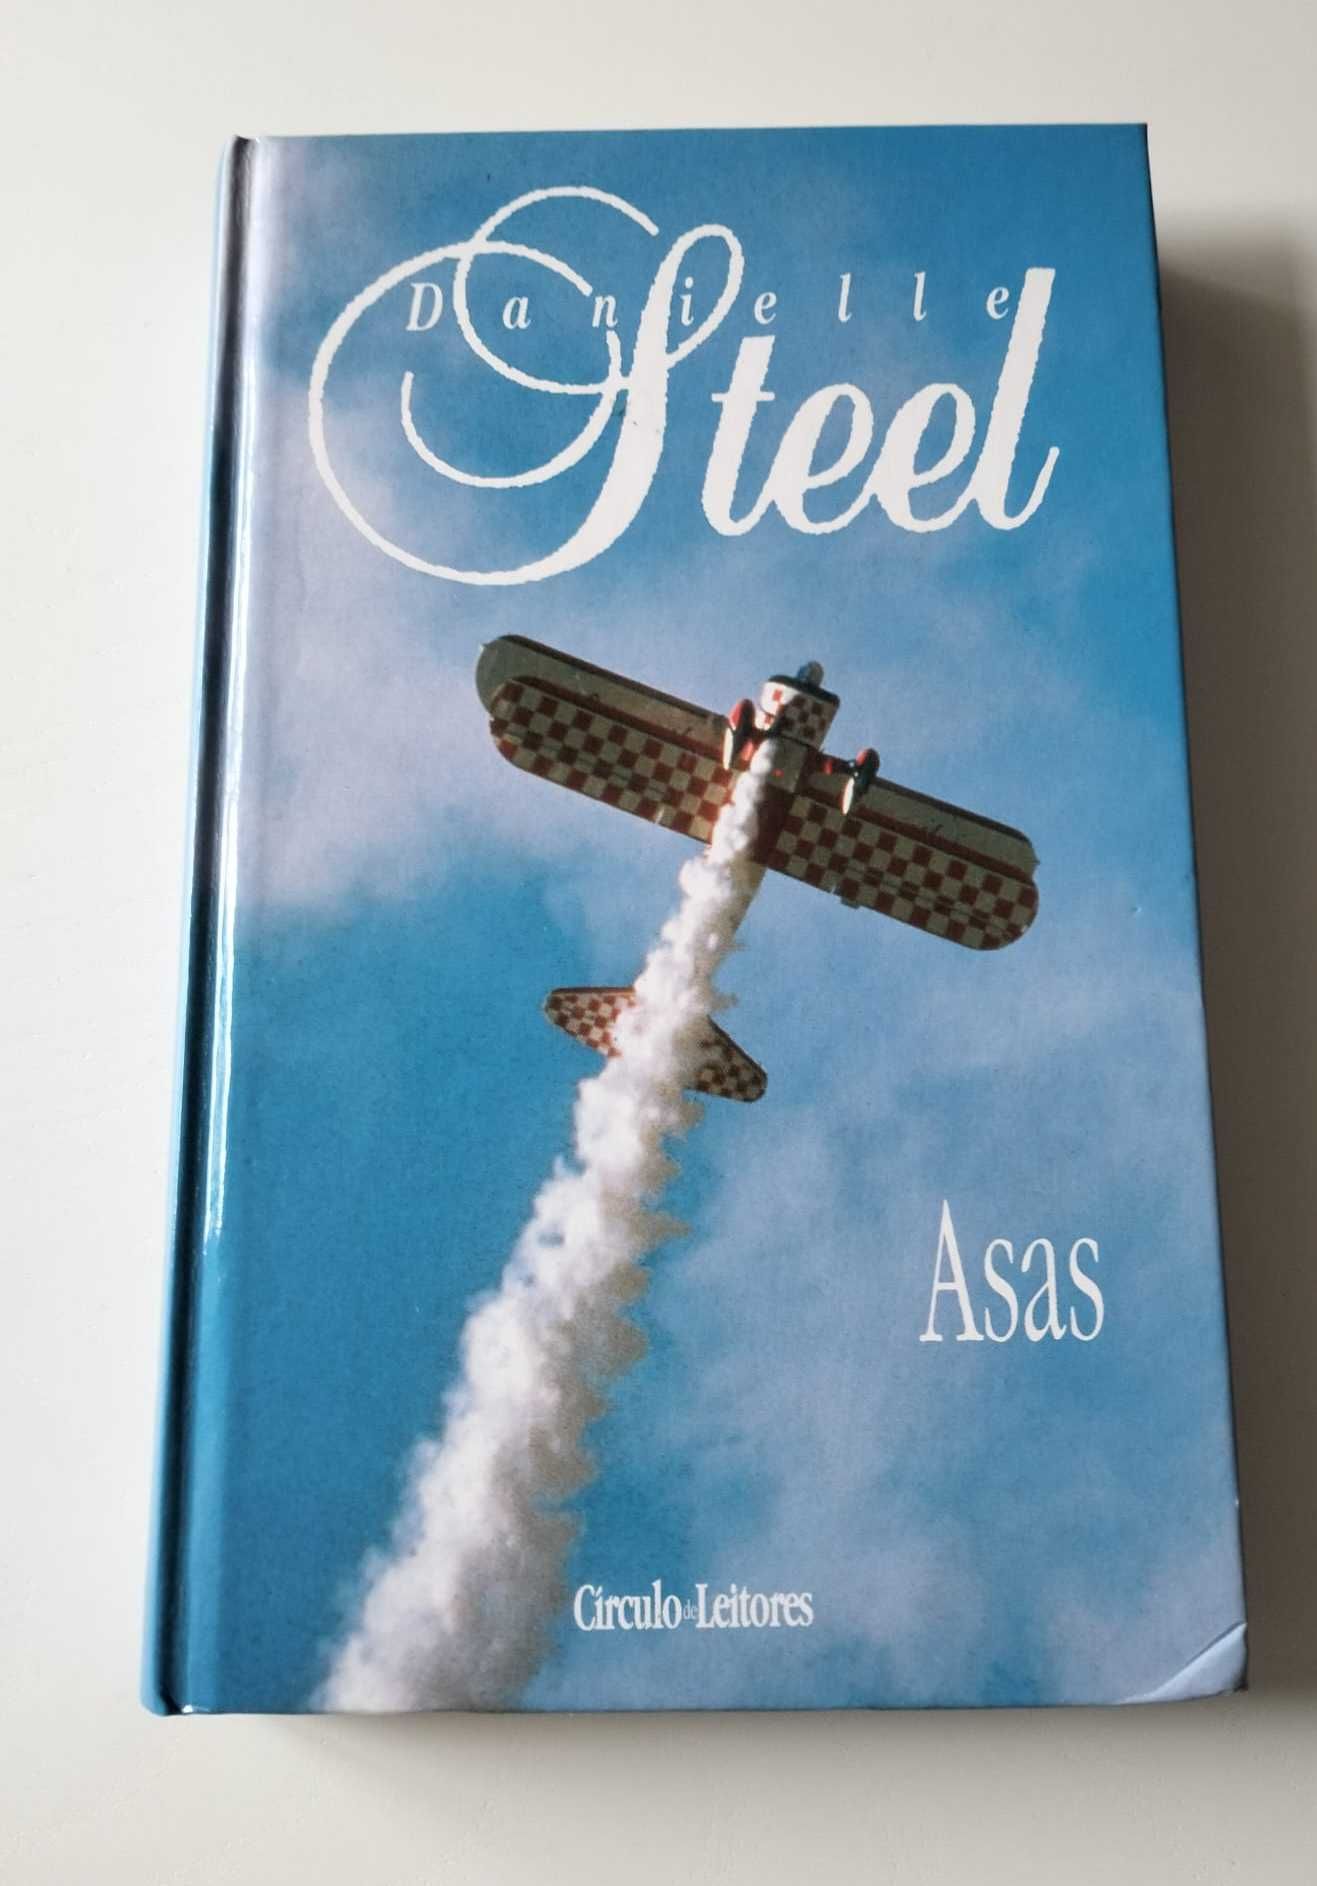 Livro "Asas" - Danielle Steel